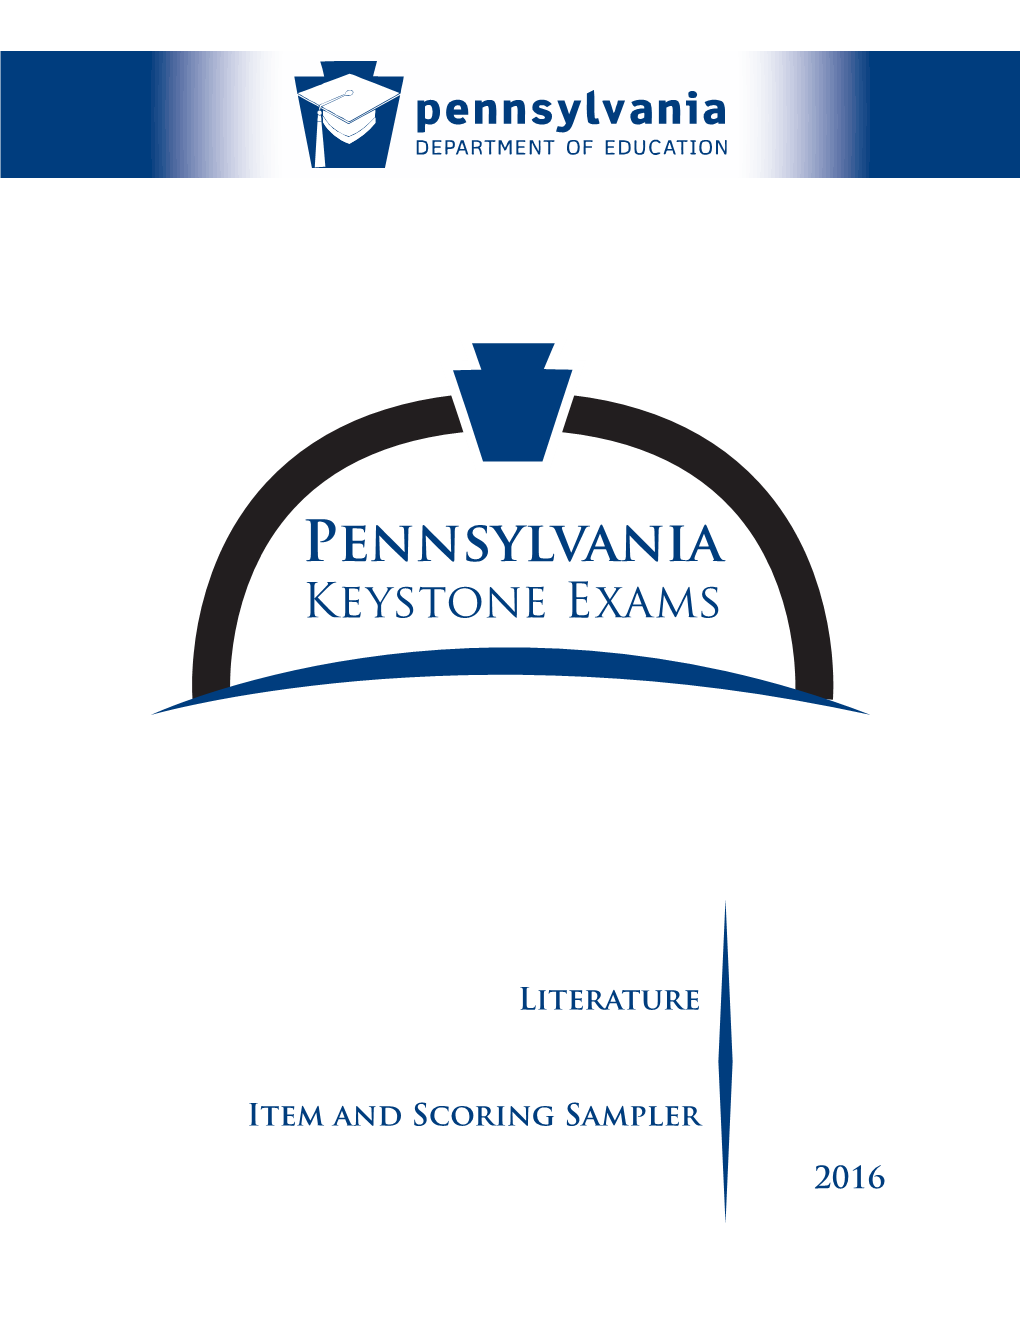 2016 Keystone Item and Scoring Sampler Literature